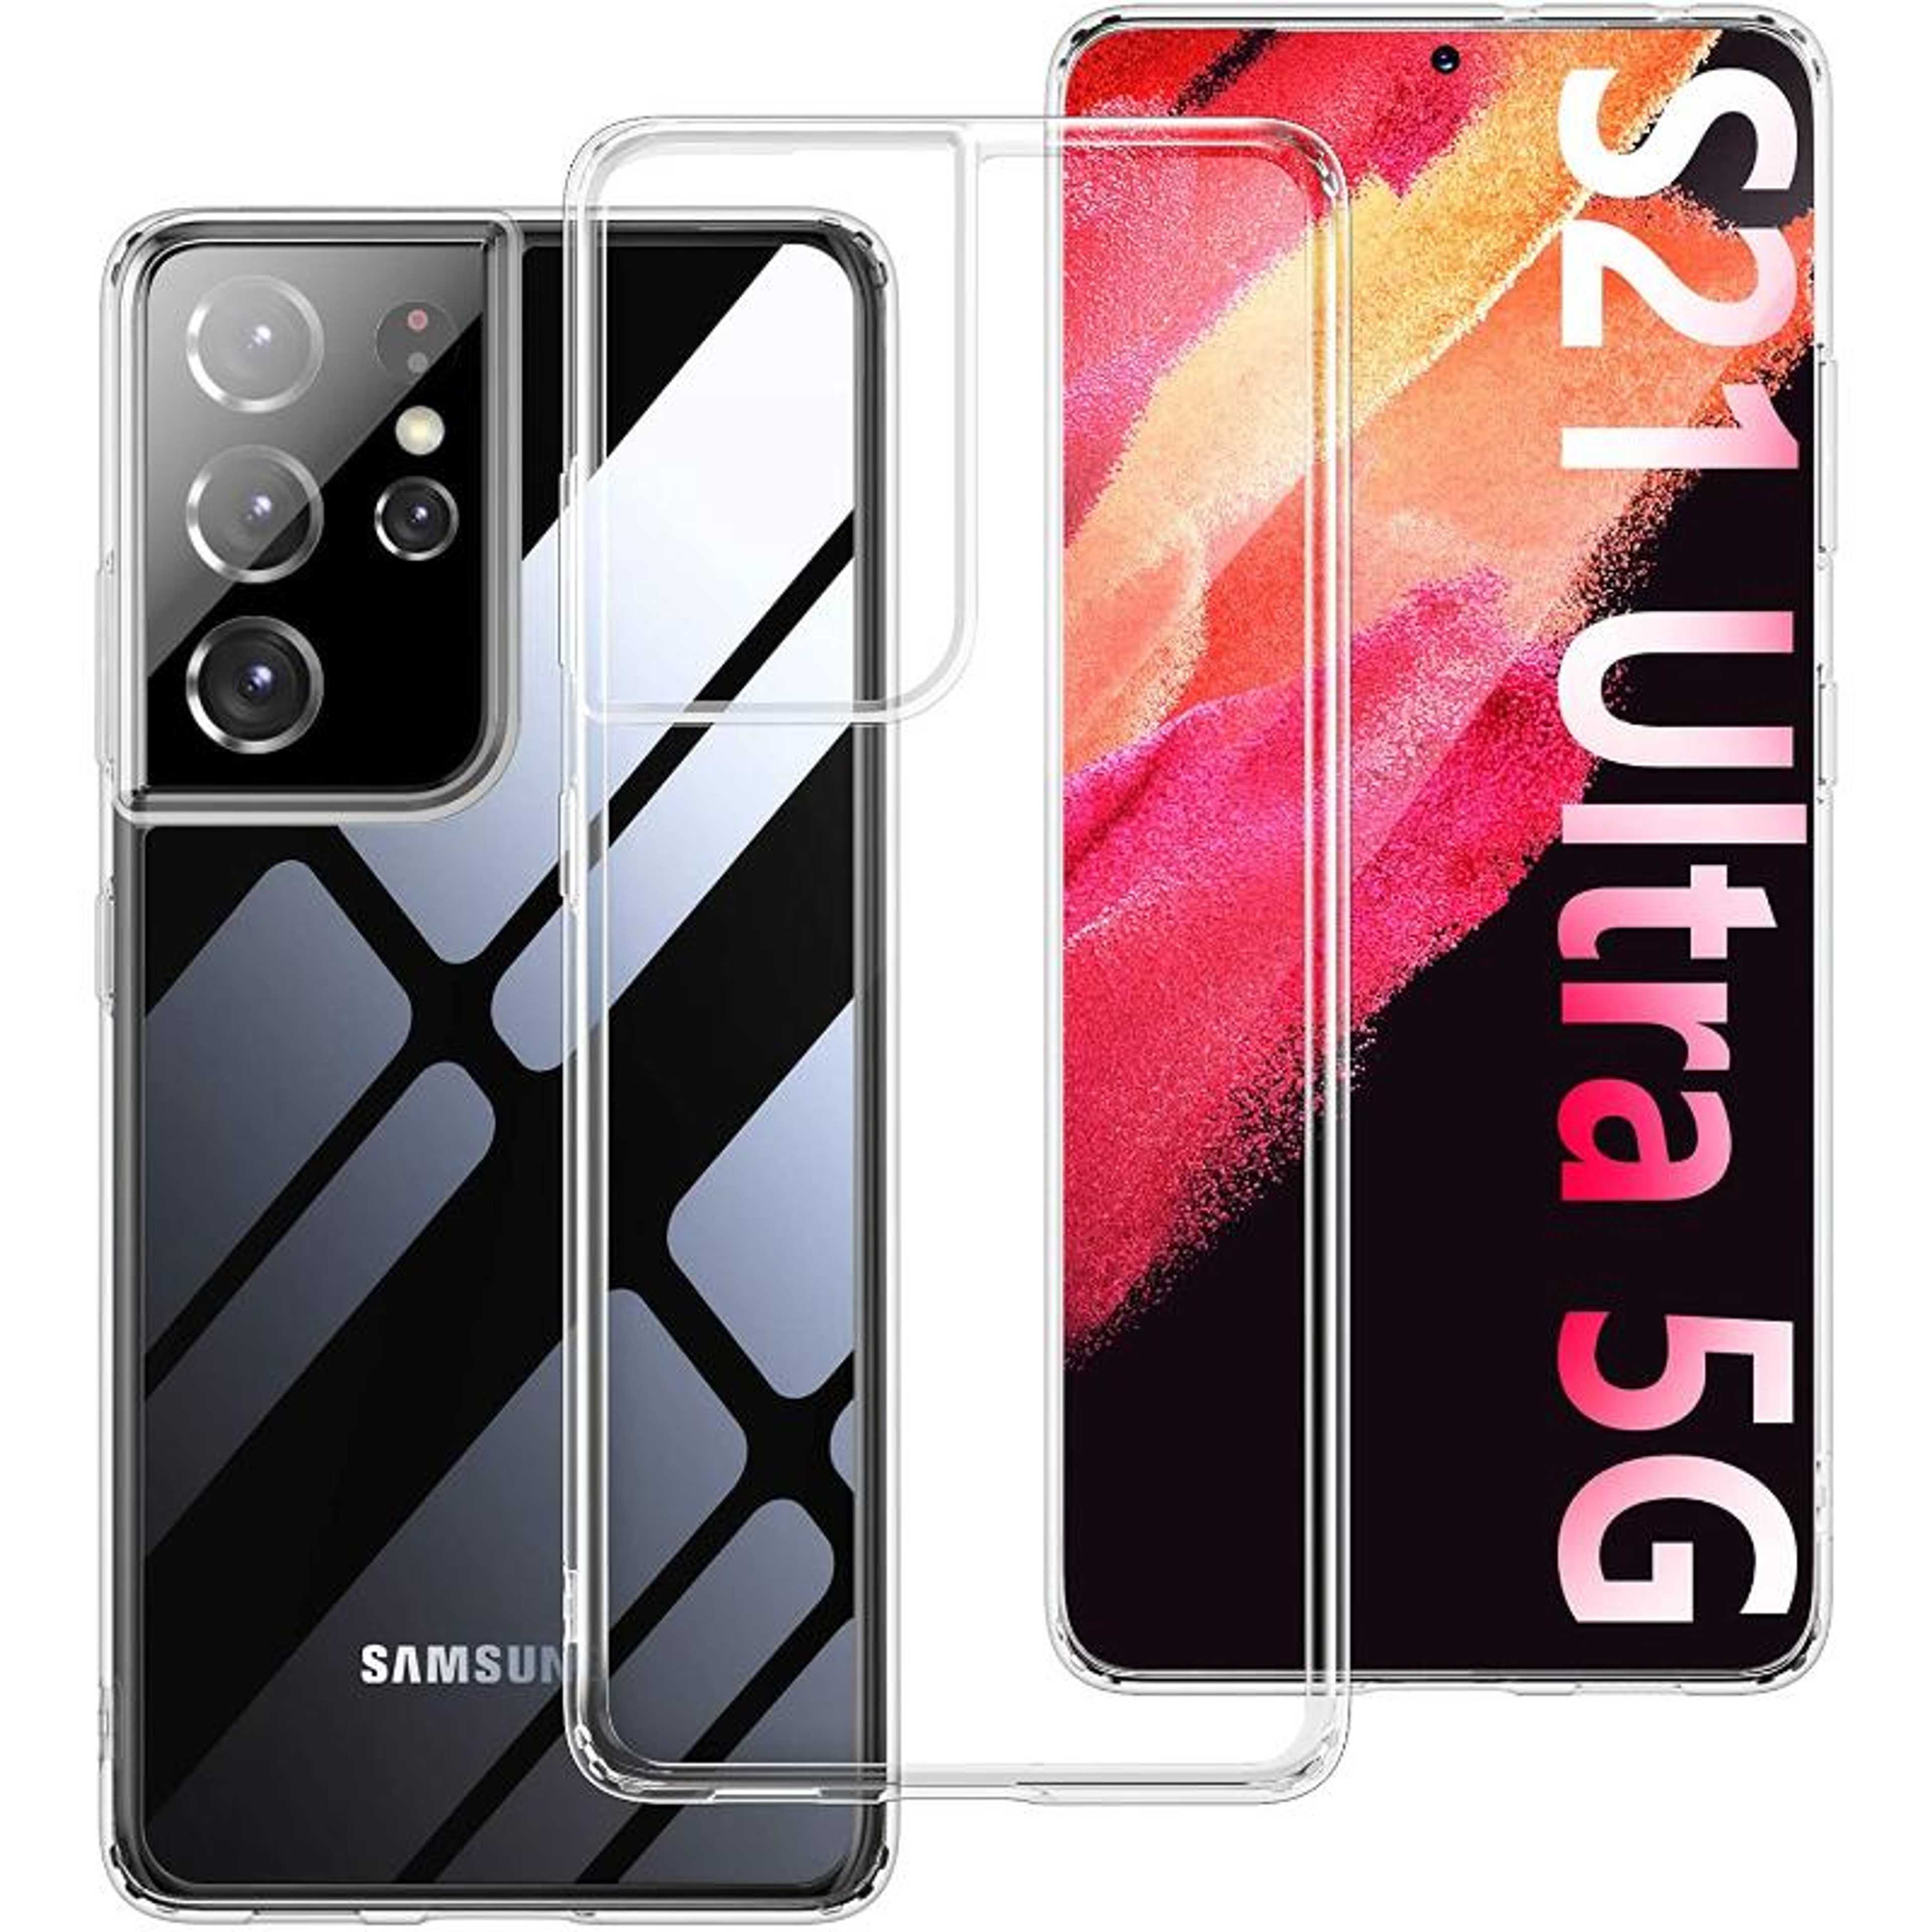 Samsung Galaxy S21 Ultra Case, with Premium Clear Soft TPU Crystal Clear Anti Scratch Acrylic Case for Galaxy S21 Ultra Phone Case 6.8 inch (2021) -Clear